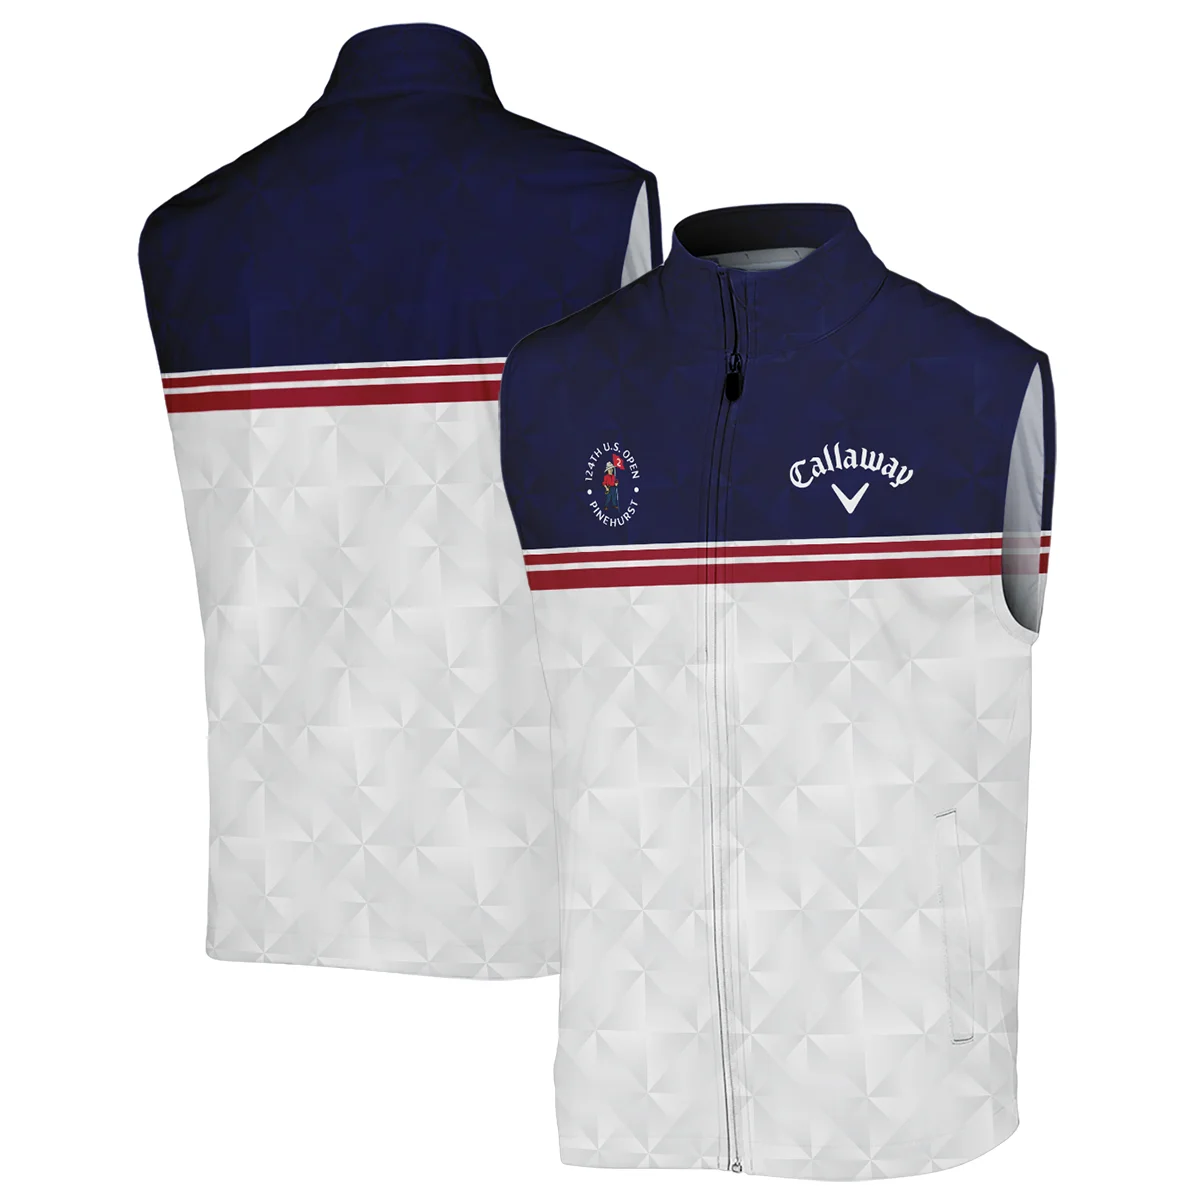 Golf Sport 124th U.S. Open Pinehurst Callaway Quarter-Zip Jacket Dark Blue White Abstract Geometric Triangles All Over Print Quarter-Zip Jacket